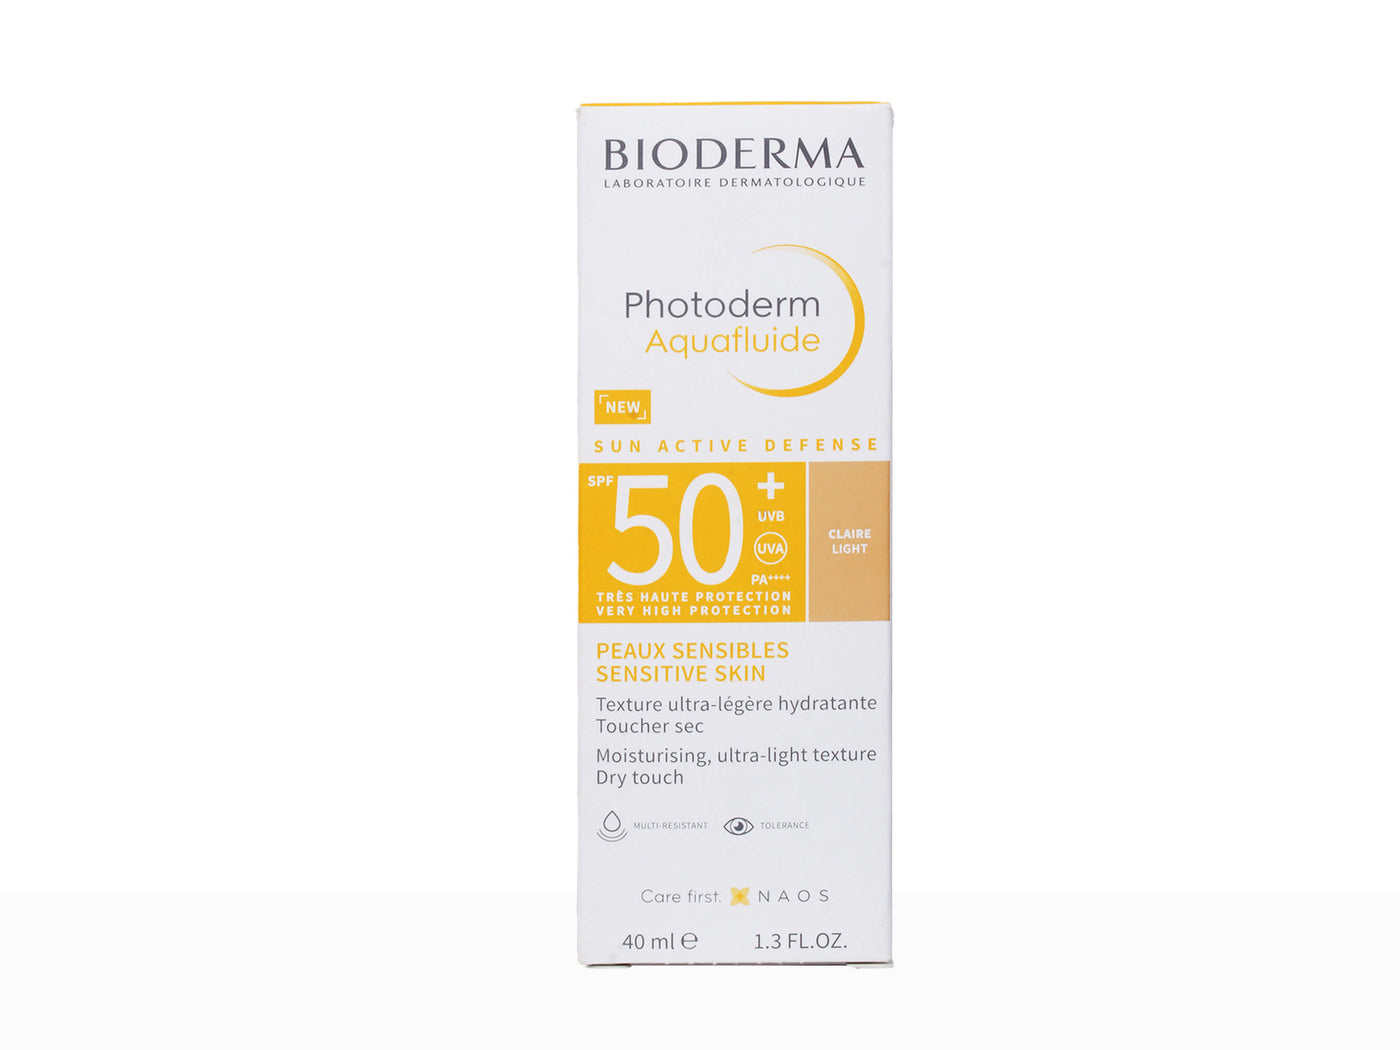 Bioderma Photoderm Aquafluide SPF 50+ PA++++ (Claire Light) - Clinikally